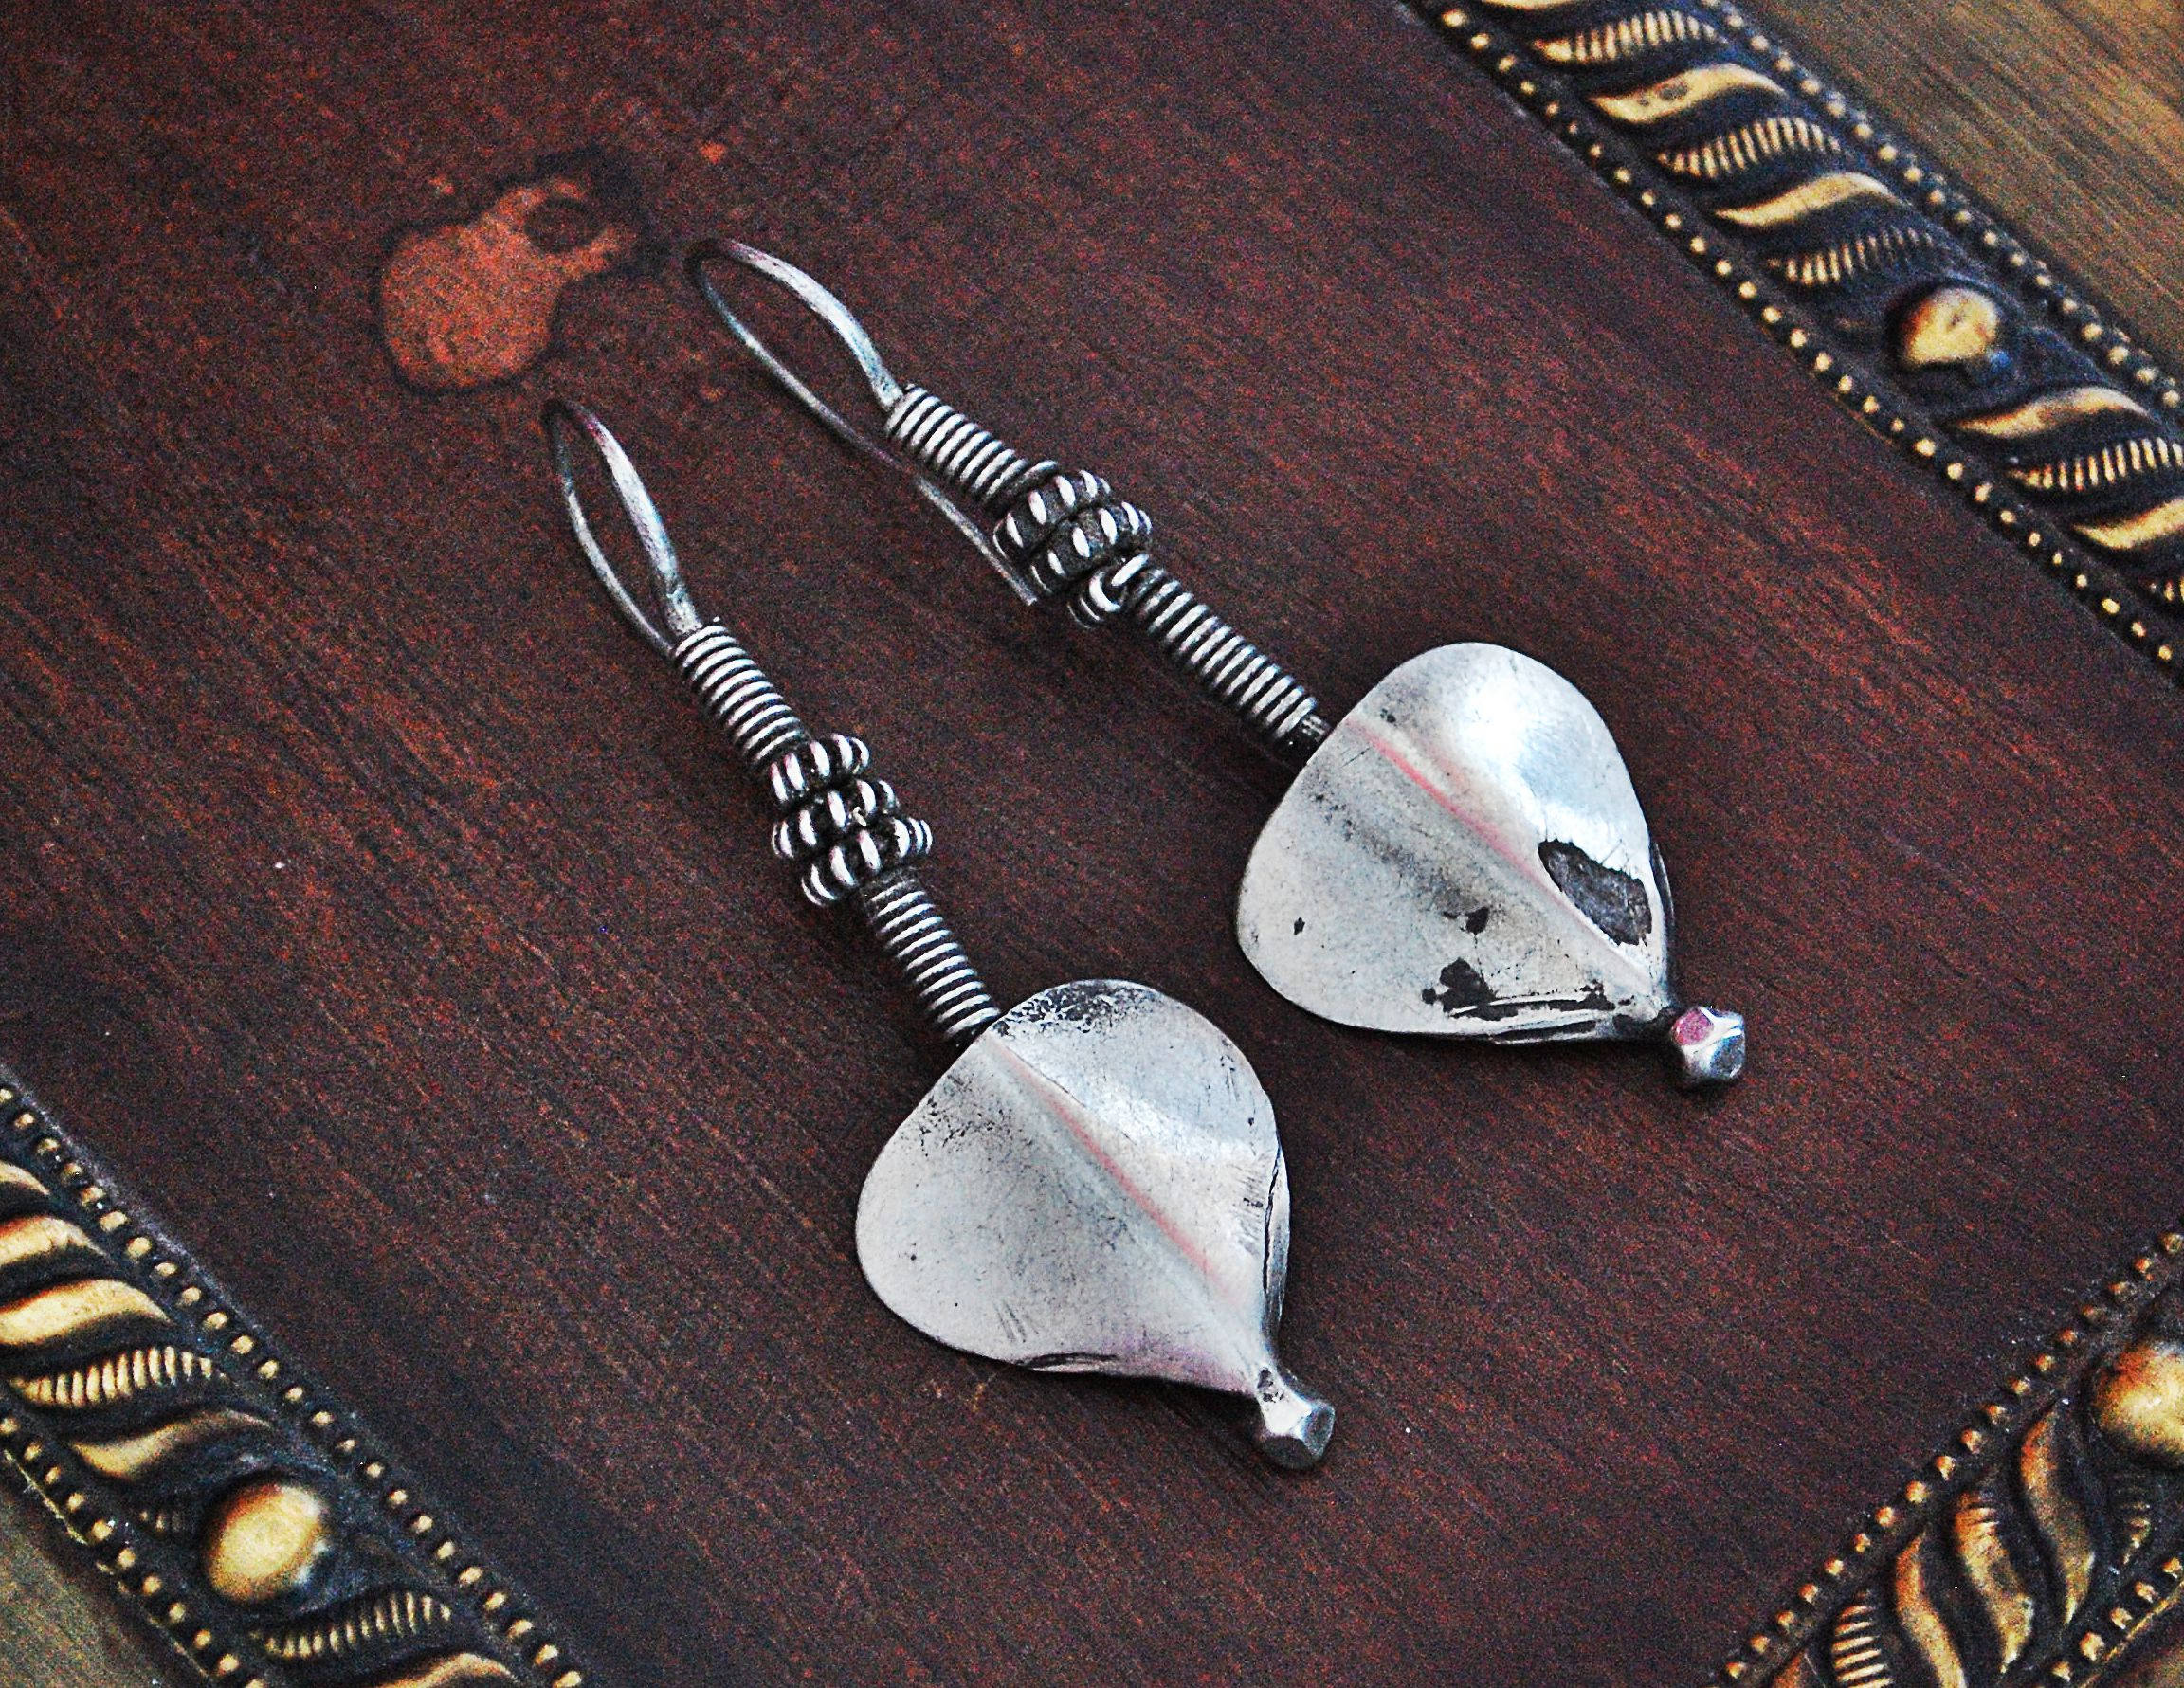 Tribal Rajasthani Earrings - Indian Tribal Silver Earrings - Gypsy Boho Earrings - Tribal Rajasthani Silver Jewelry - Ethnic Tribal Earrings